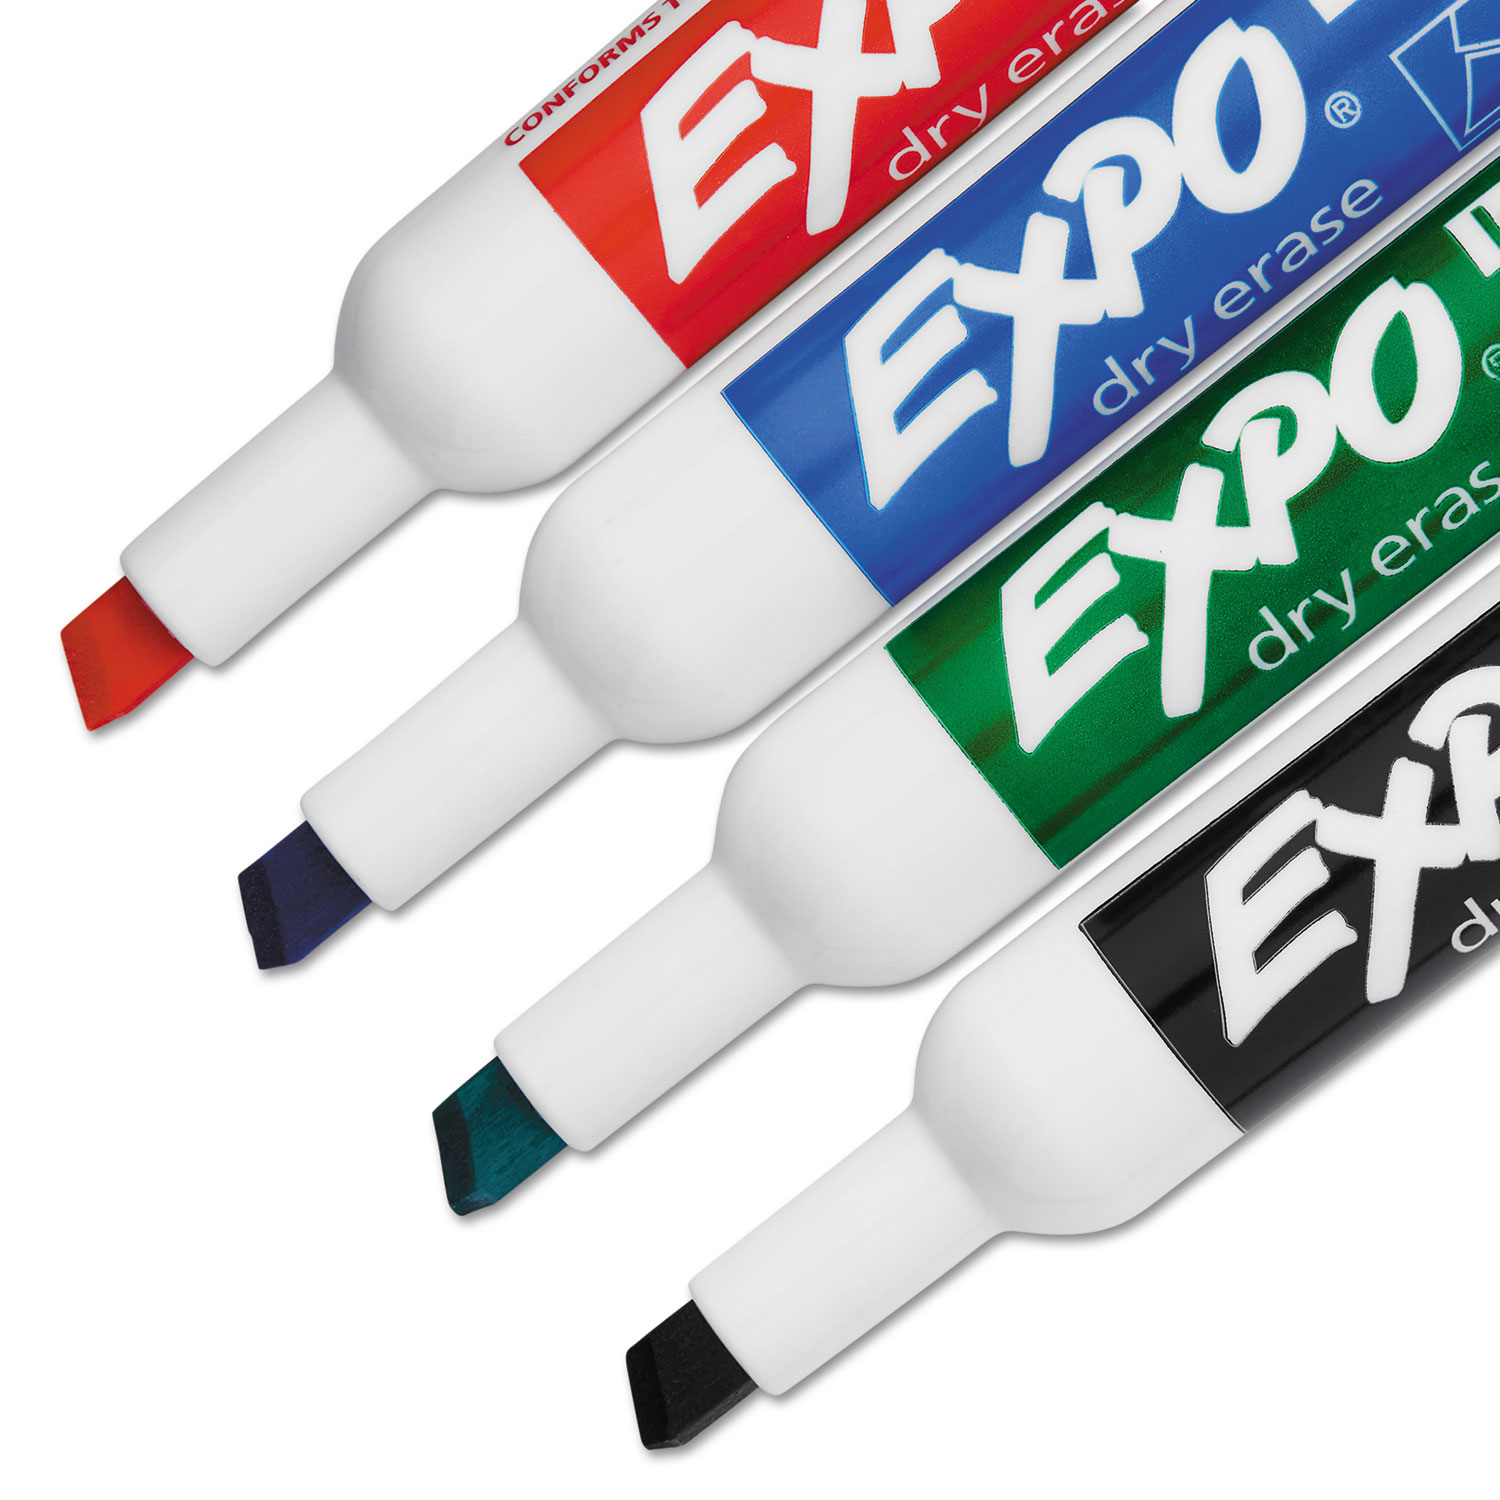 Expo Dry-Erase Set, w/4 Markers/Eraser/Spray, Fine Tip, Assorted PK  SAN80675